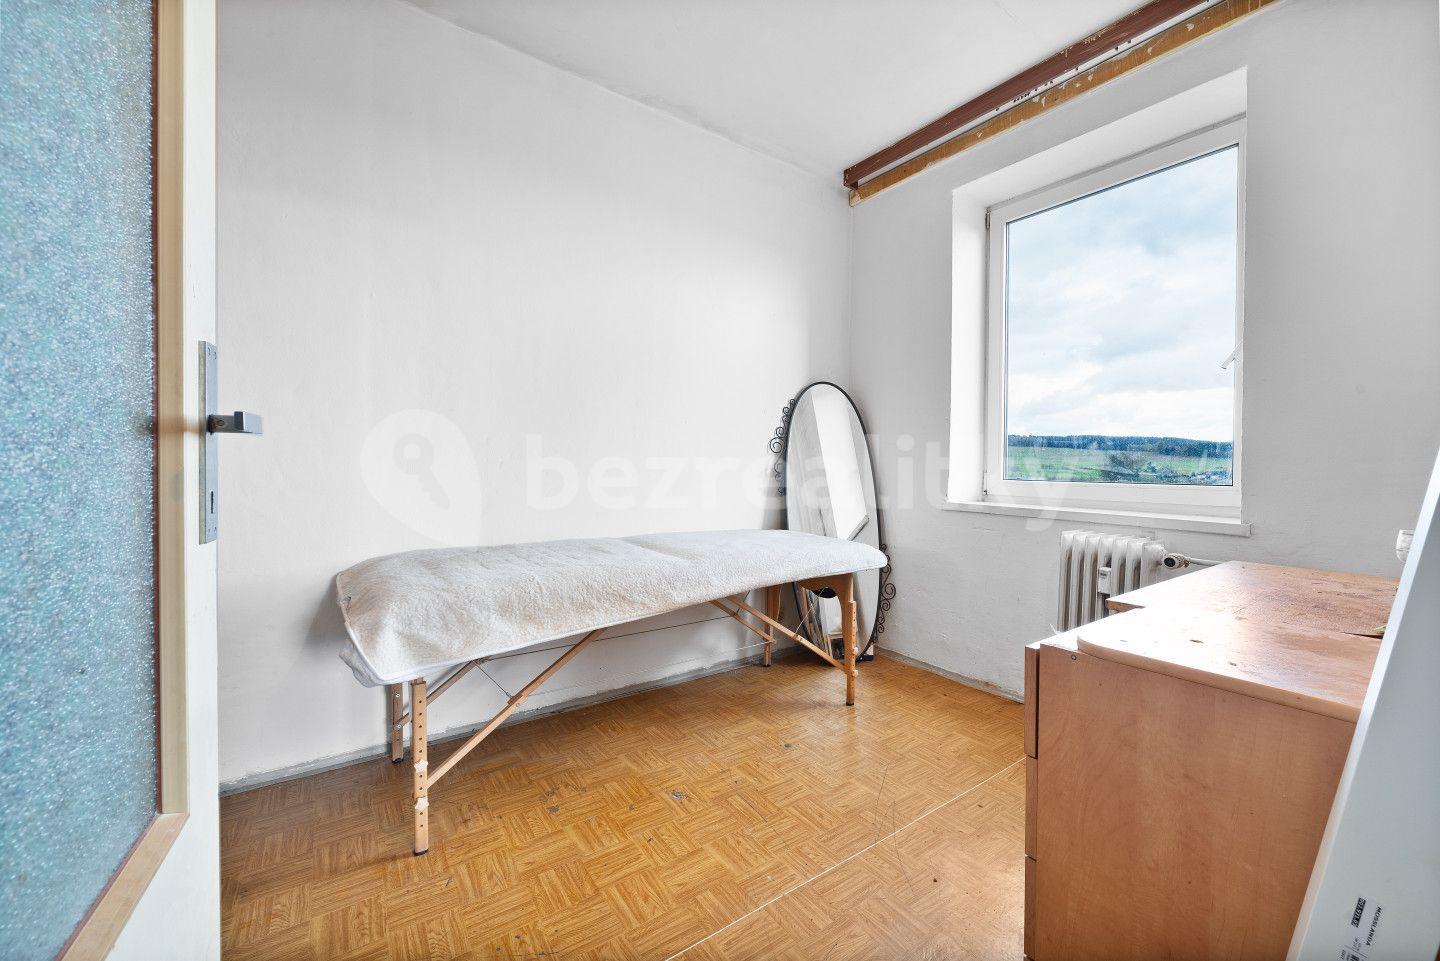 5 bedroom flat for sale, 85 m², V Aleji, Letohrad, Pardubický Region